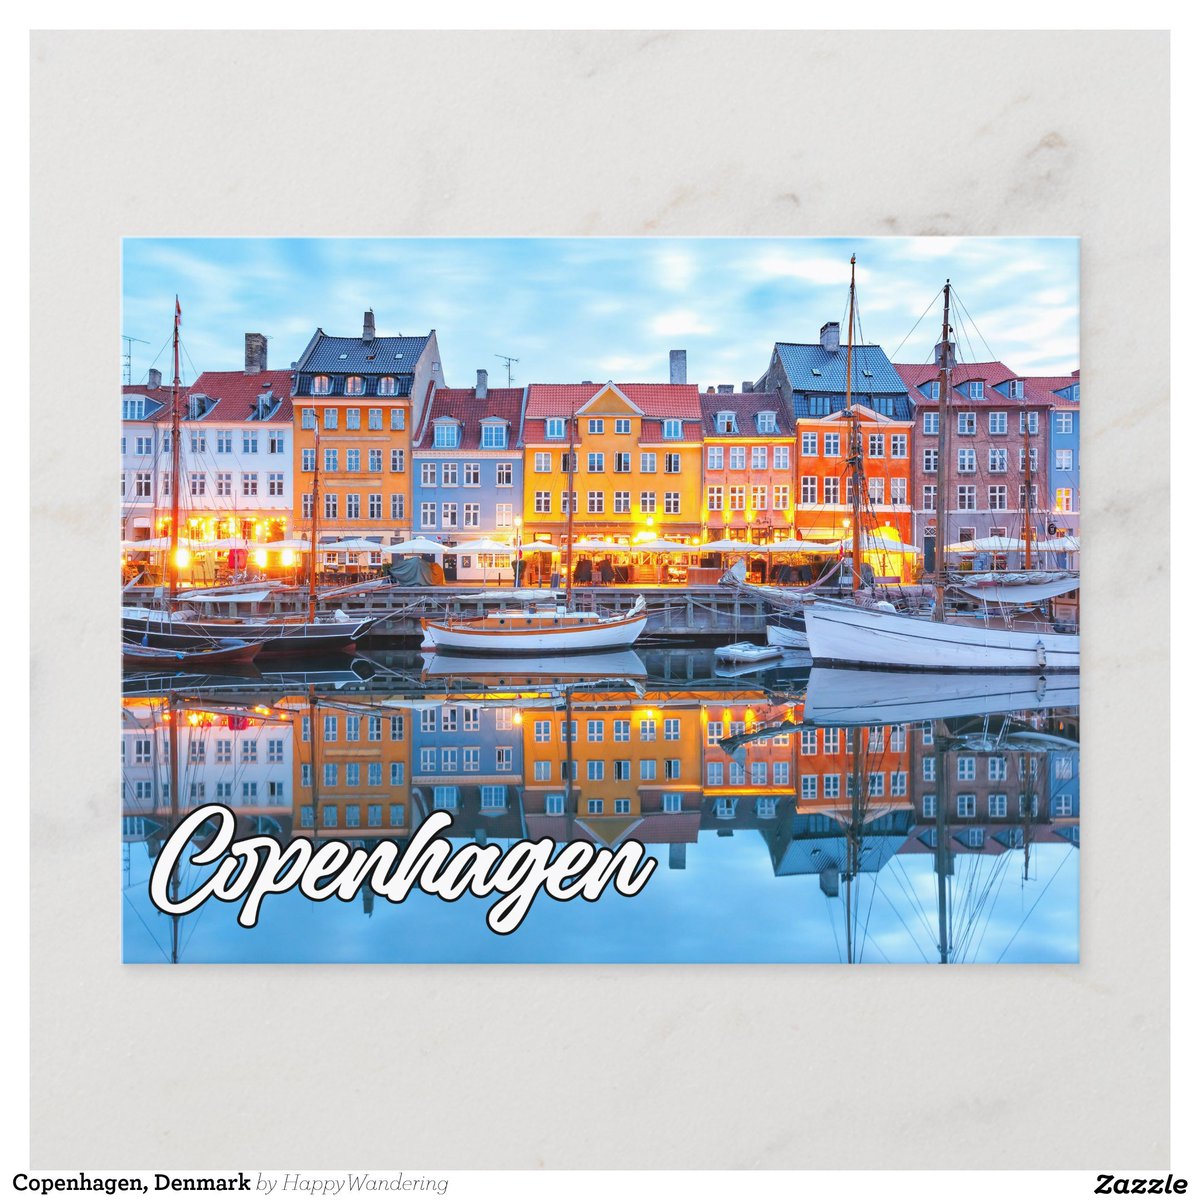 Copenhagen, Denmark Postcard→zazzle.com/z/agbd5jsc?rf=…

#Postcards #Traveling #Souvenirs #Photography #Stationery #Tourism #Vacation #Greetings #Zazzlemade #Europe #Hello #ThinkingOfYou